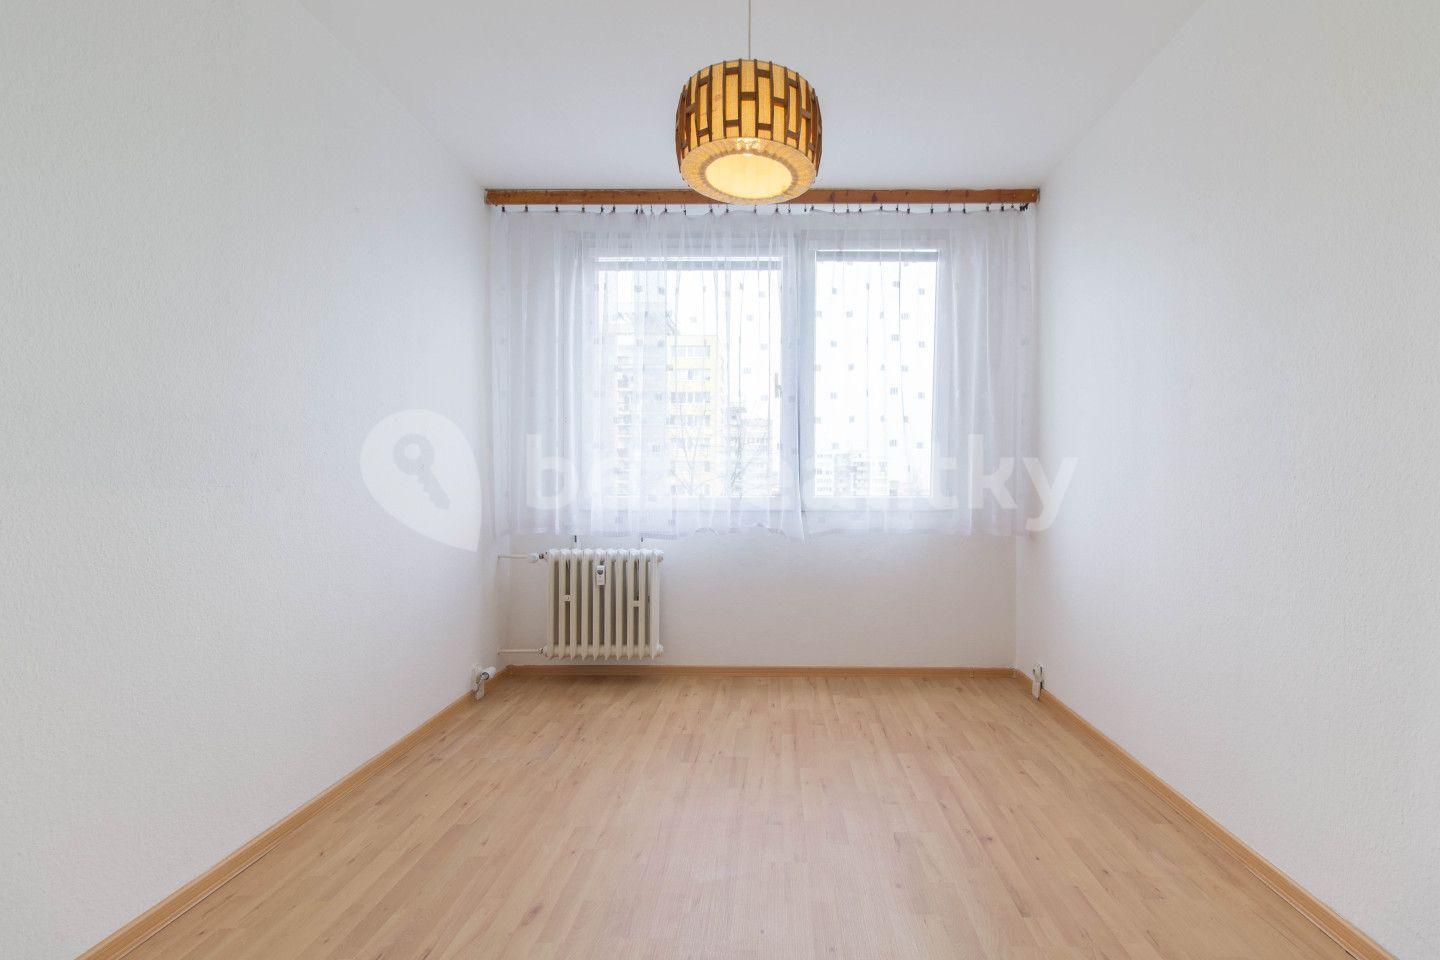 4 bedroom flat for sale, 80 m², Hurbanova, Prague, Prague